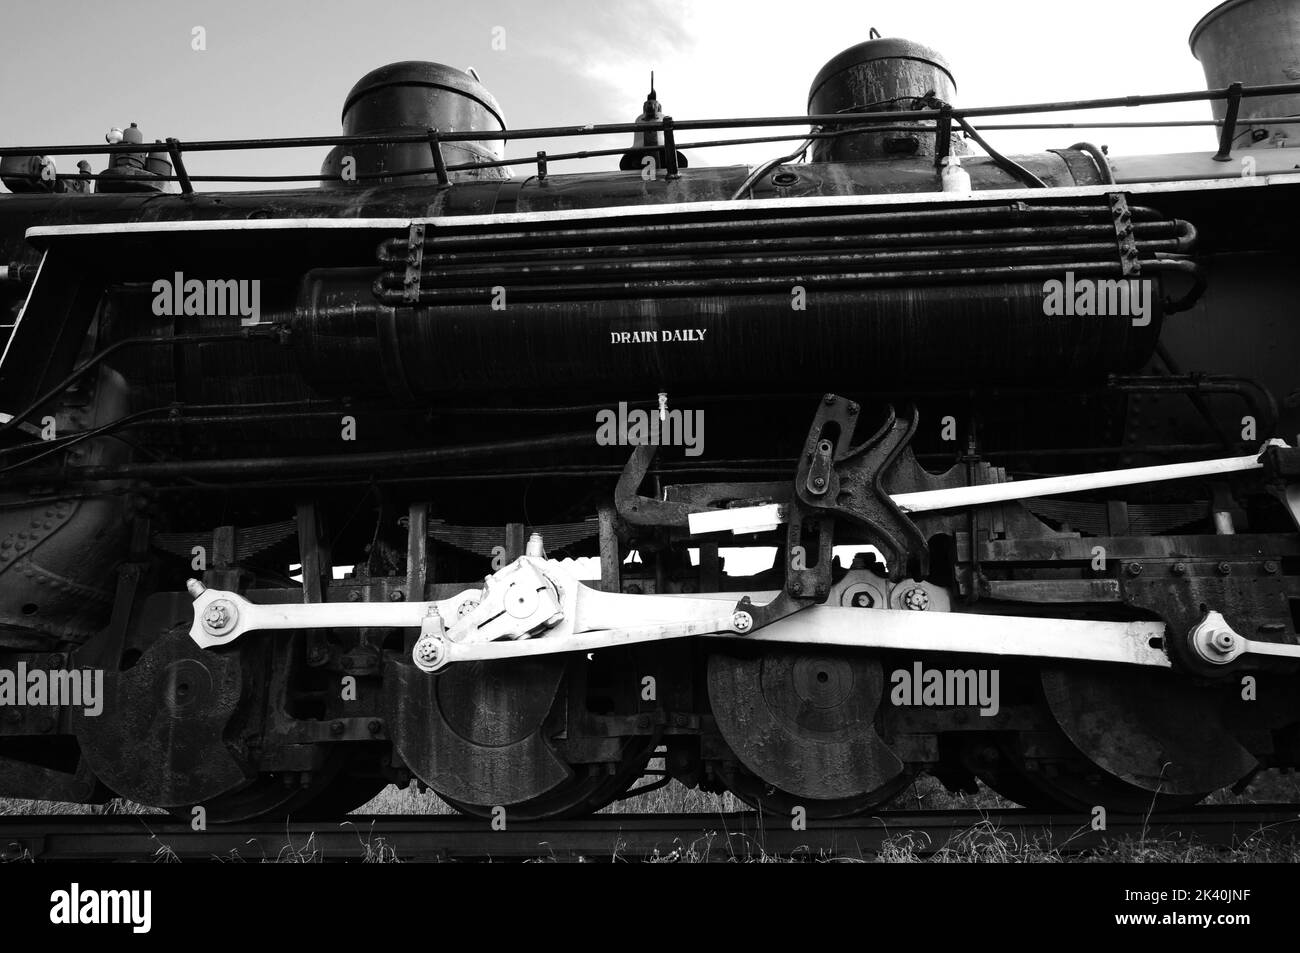 Vintage black steam powered railway train stock photo Stock Photo